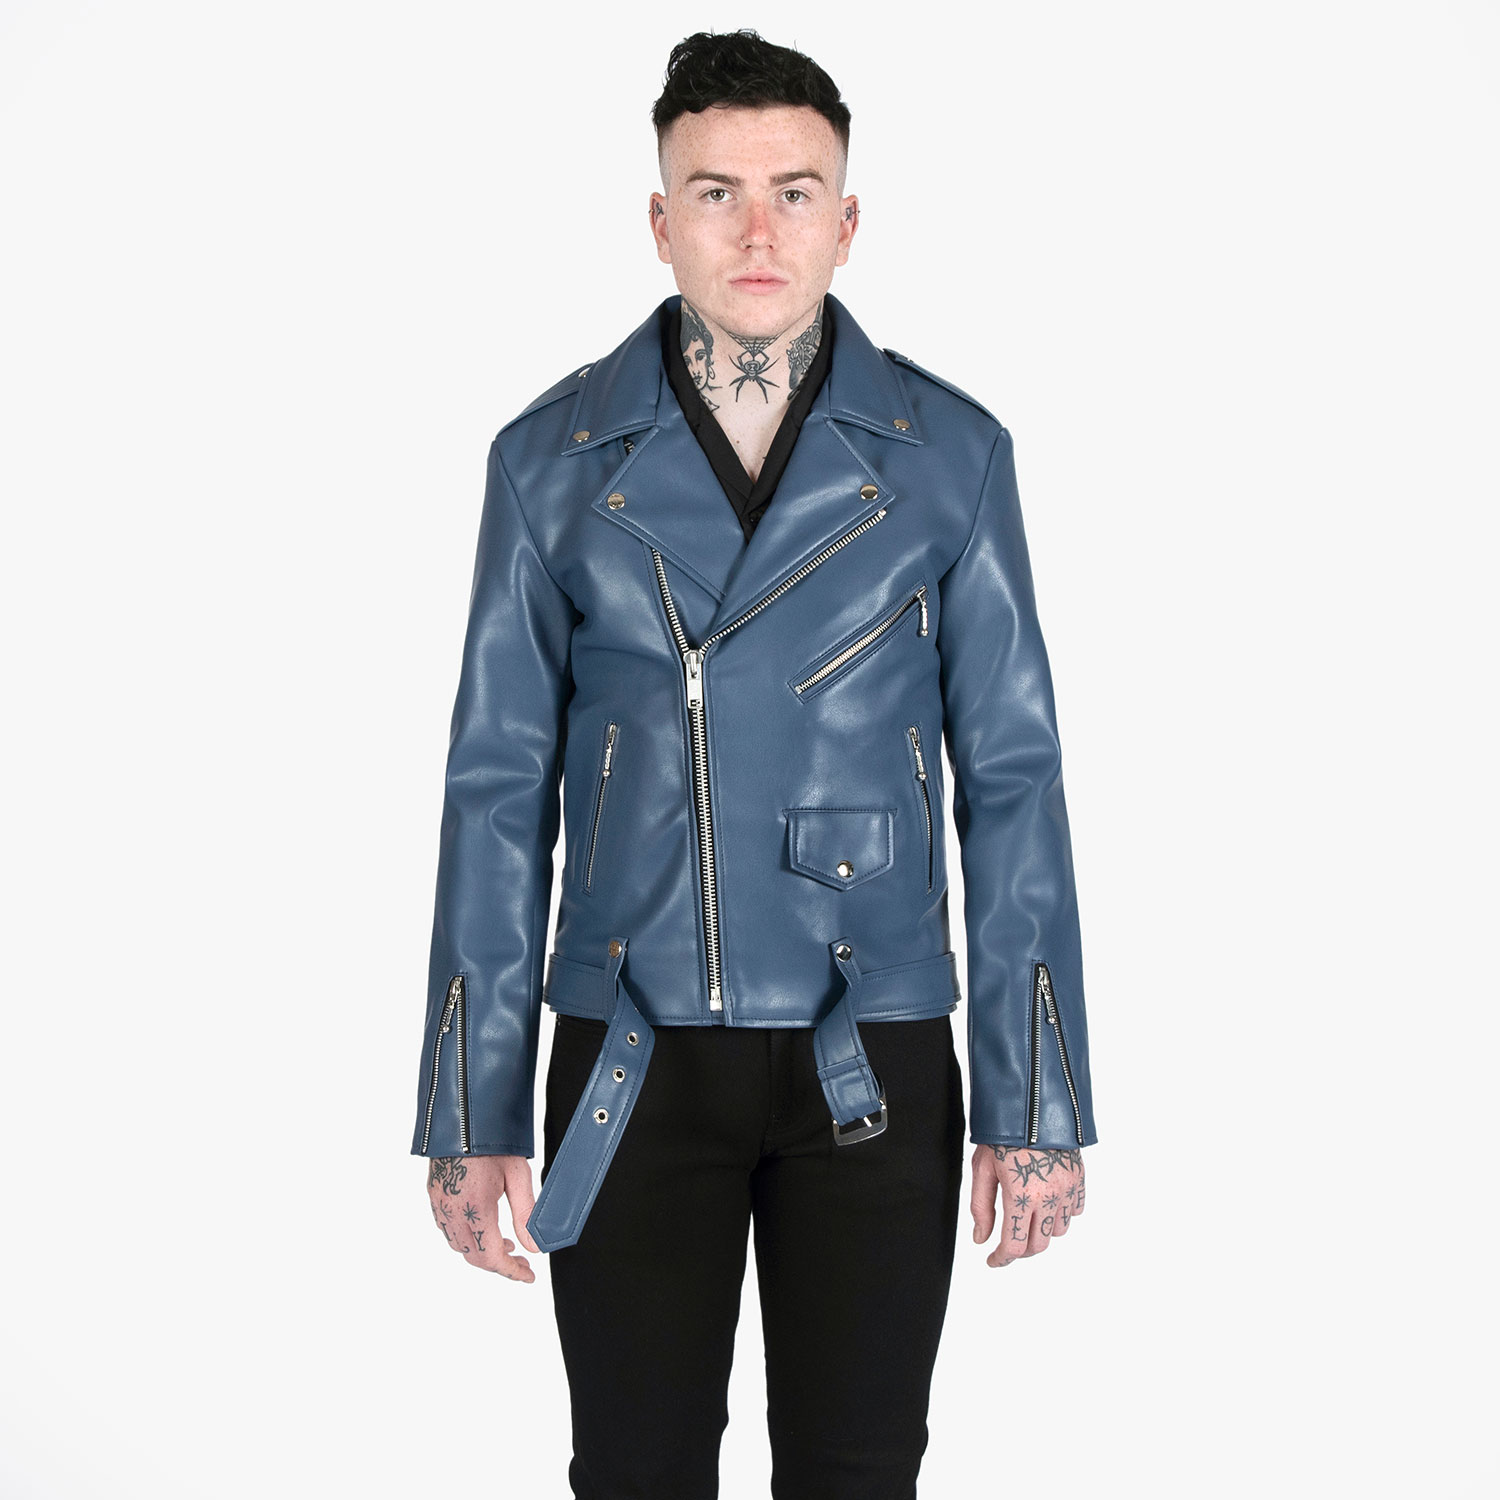 Men's Blue Leather & Faux Leather Jackets